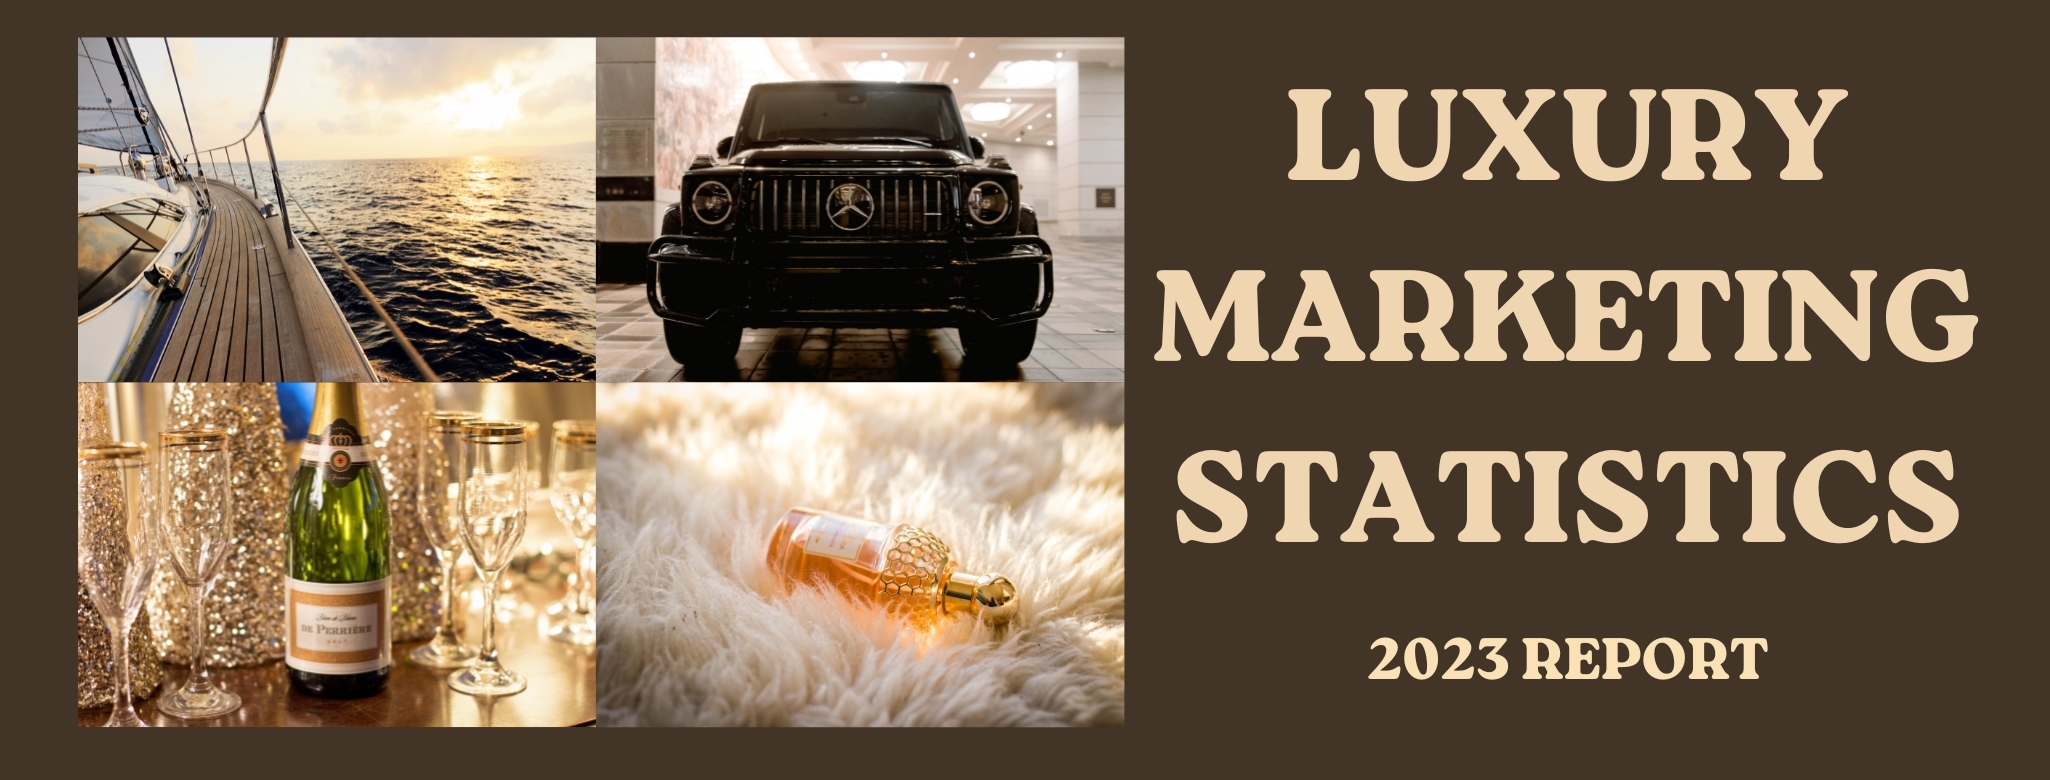 luxury marketing statistics